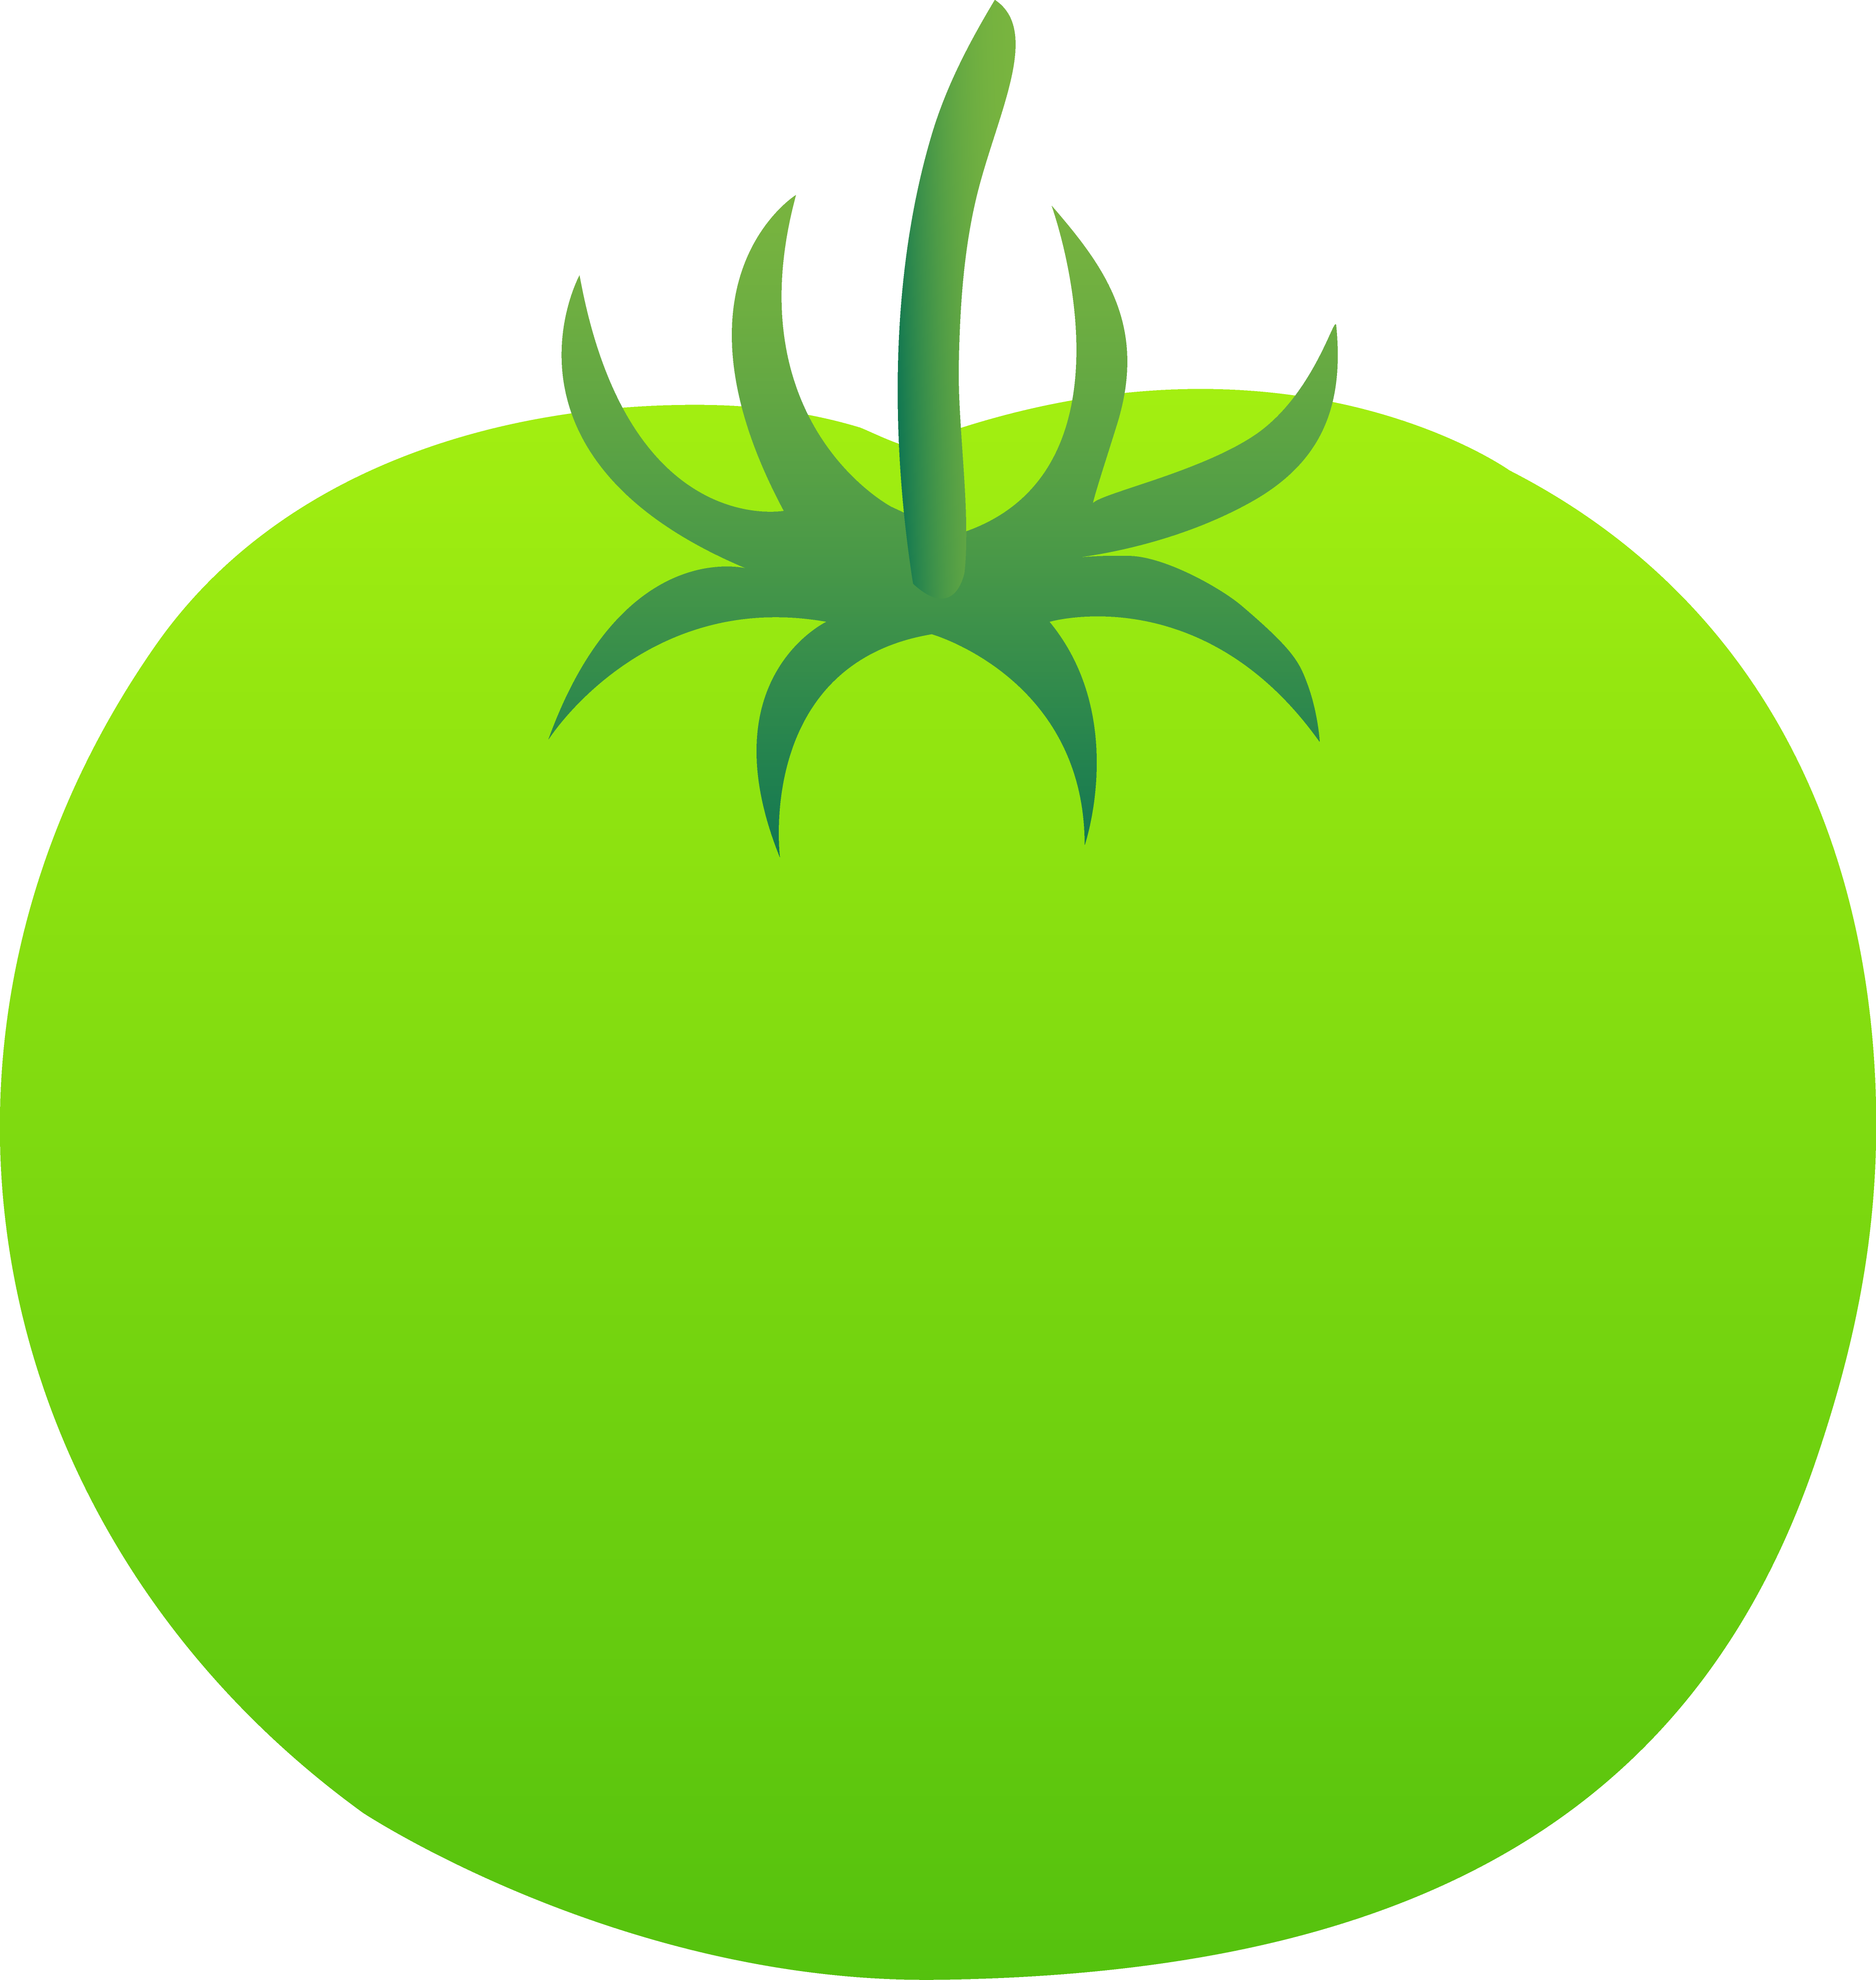 Divider clipart apple. Green tomato 